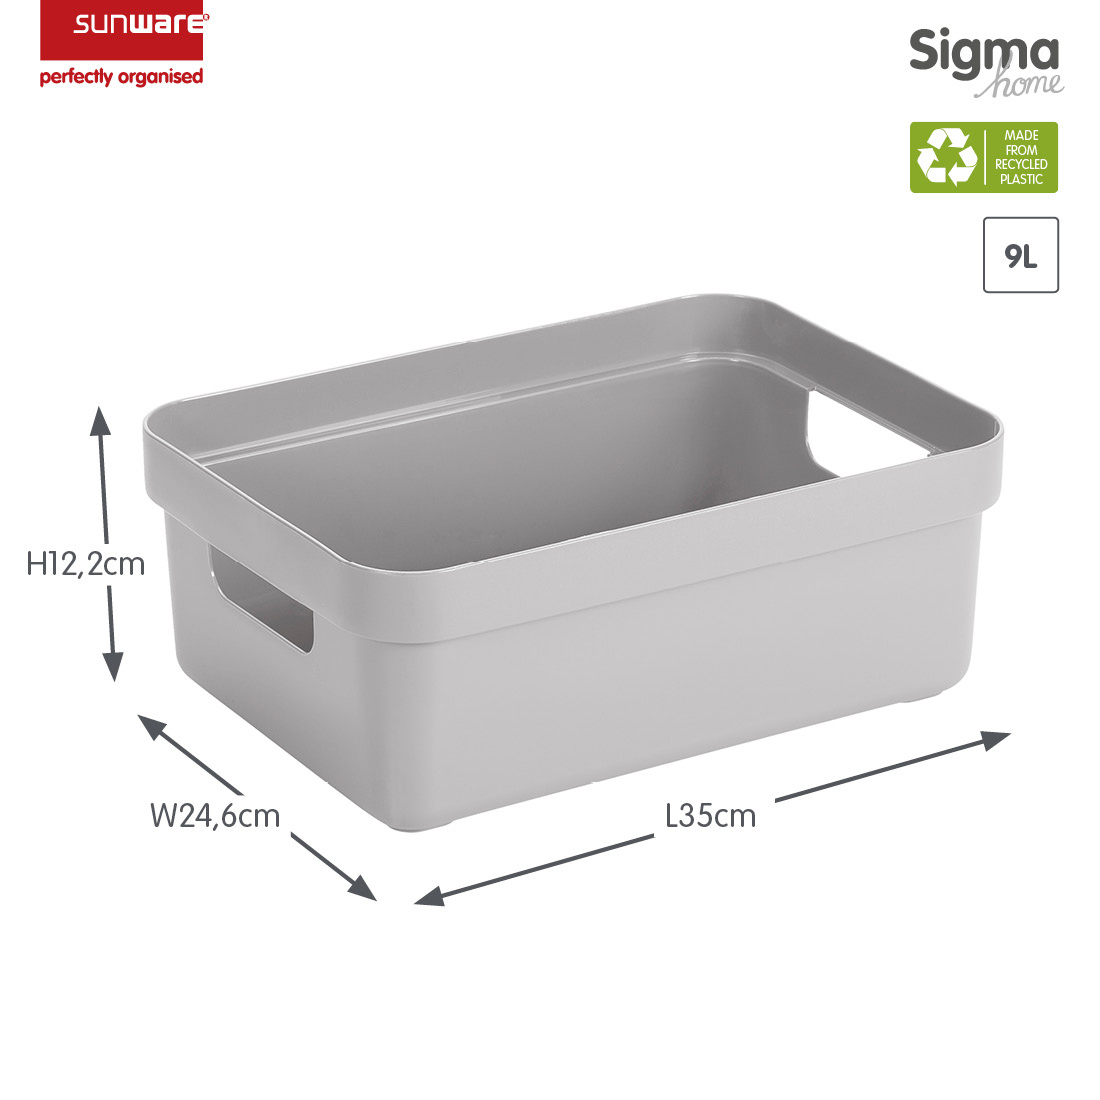 Sigma home storage box 9L grey